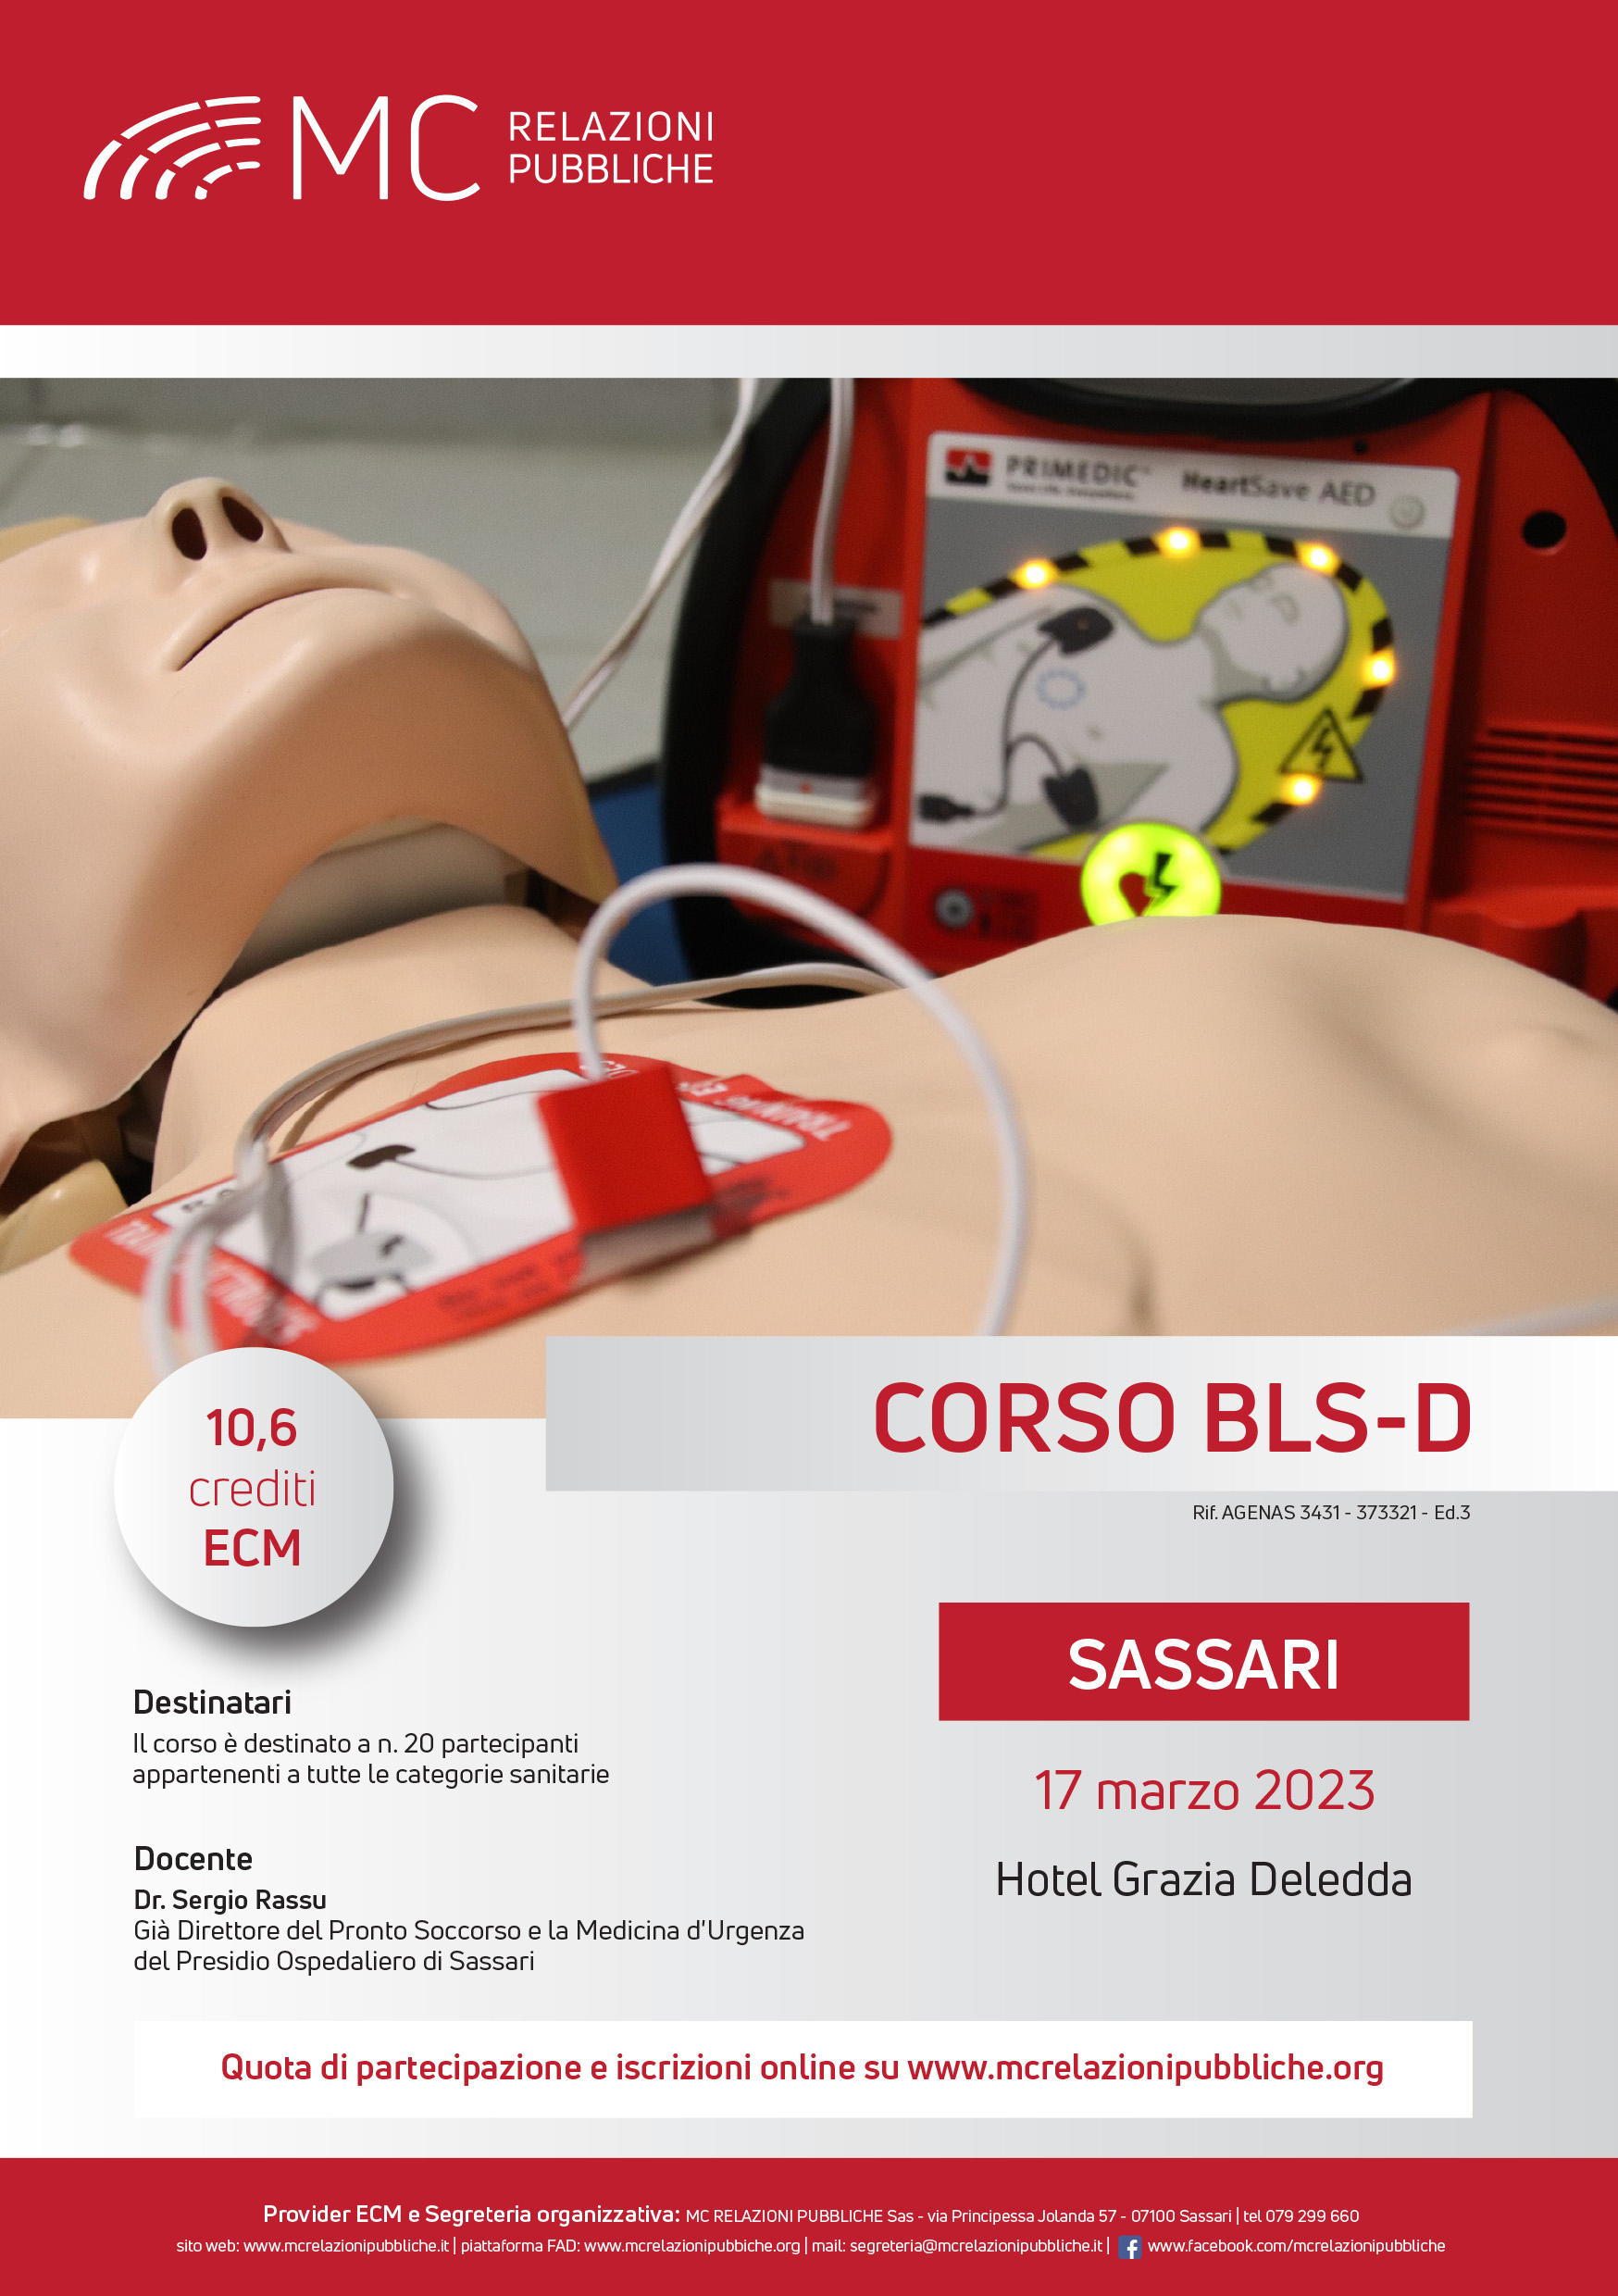 Corso BLS-D. Basic Life Support-Defibrillation - 17 marzo 2023